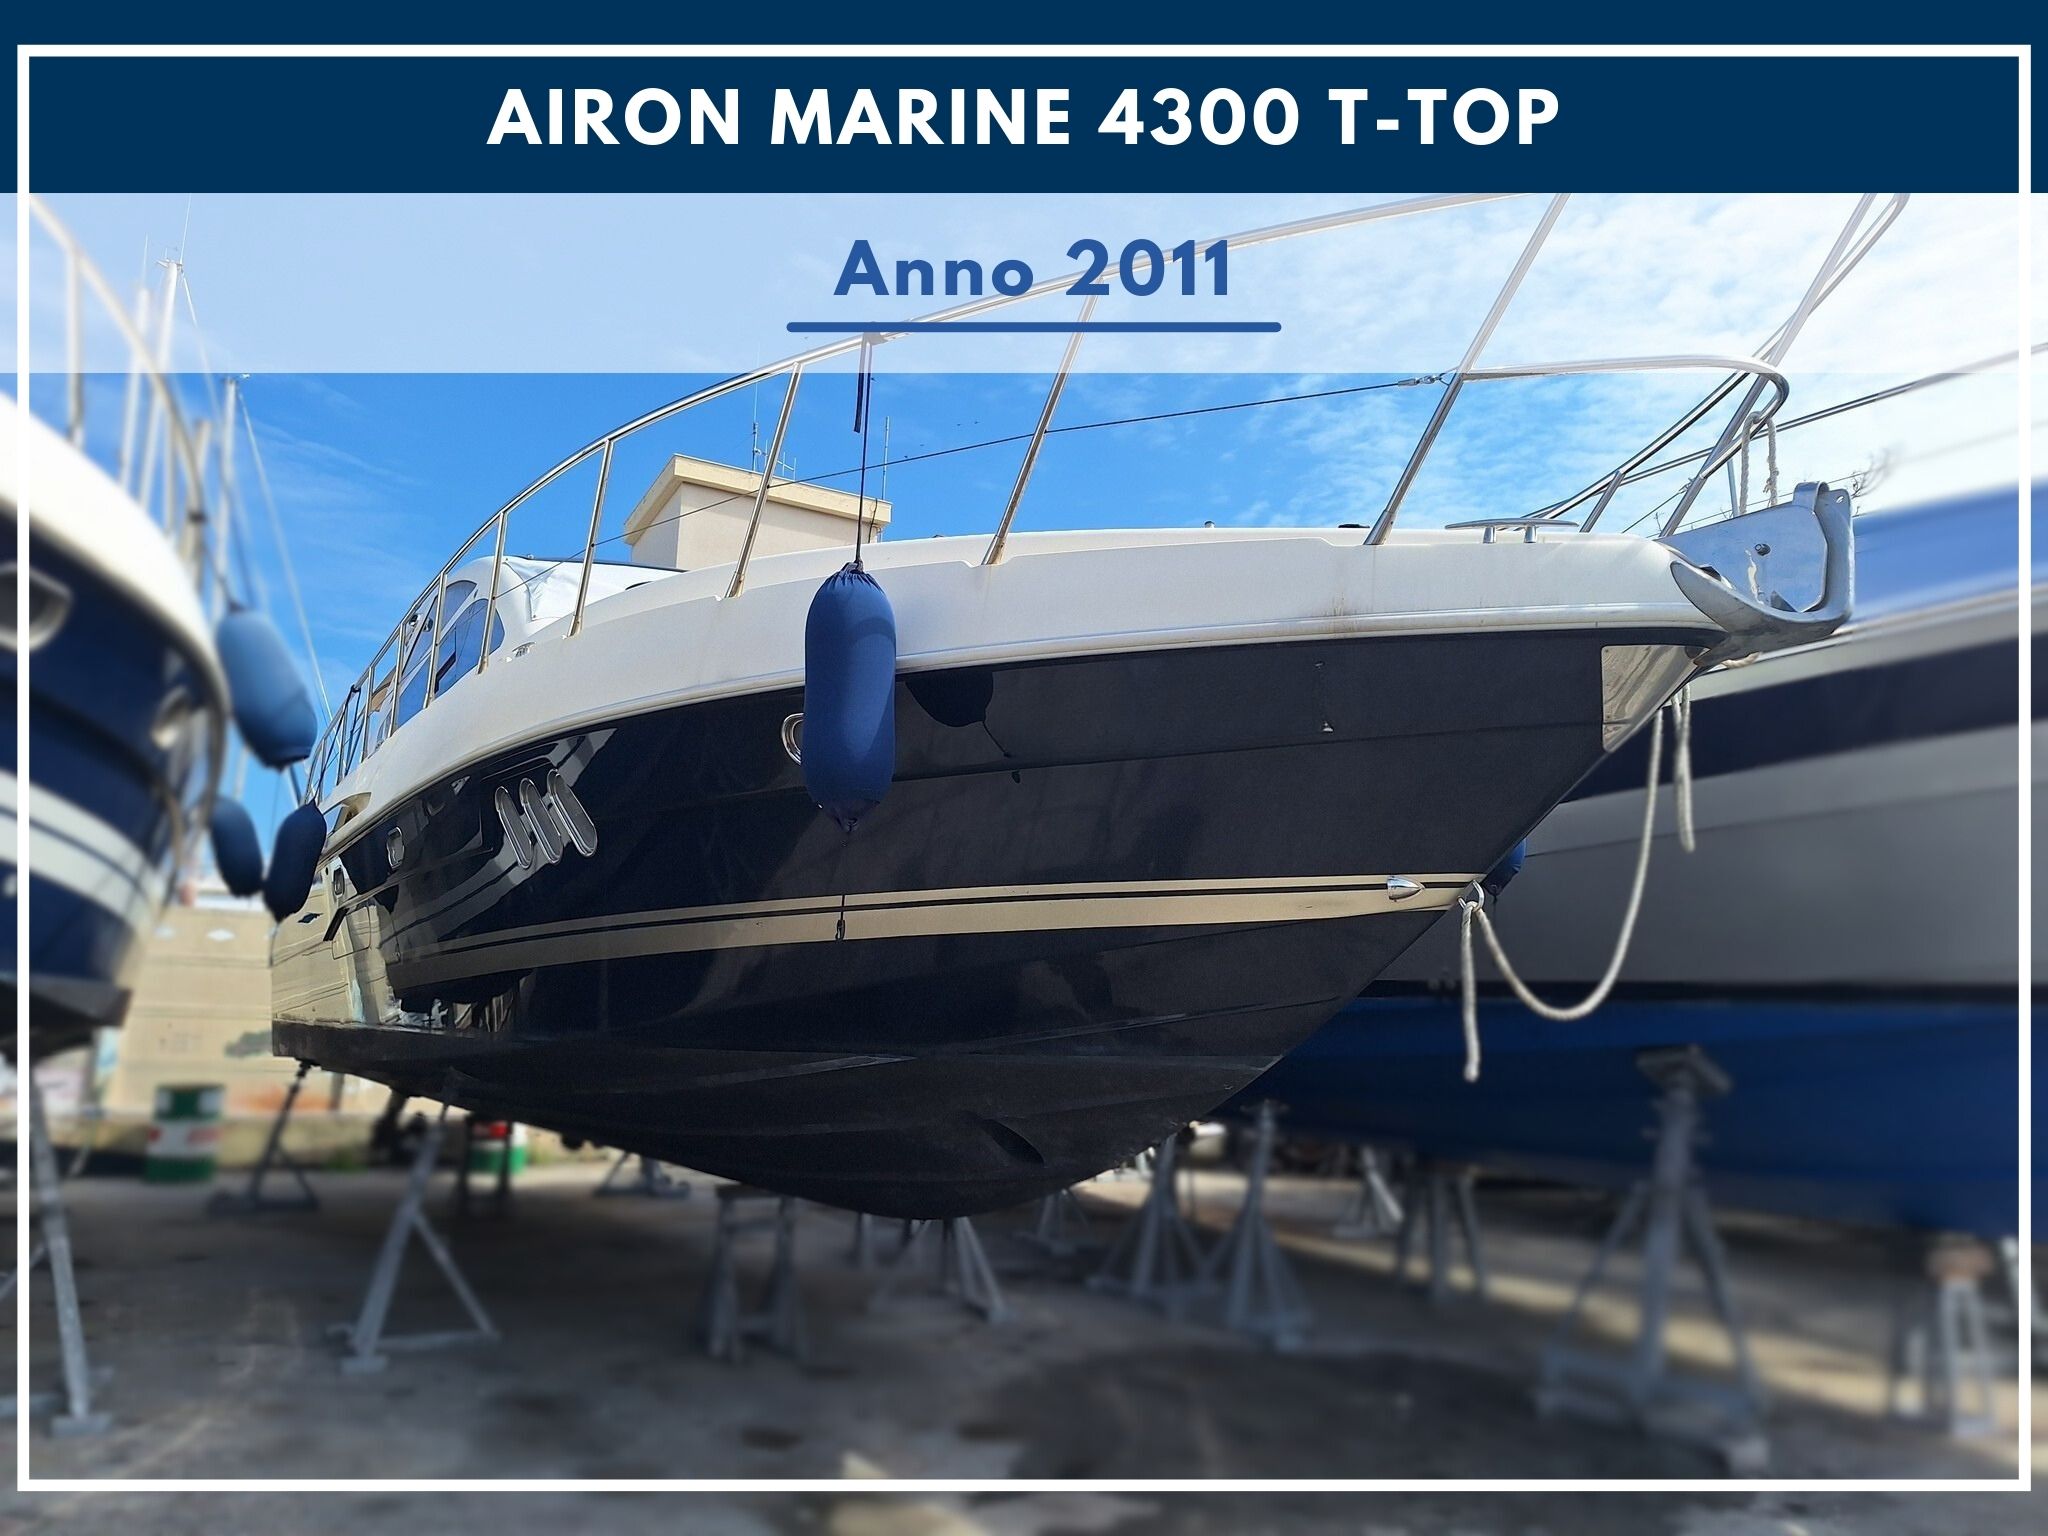 Nuovo Arrivo: Airon Marine 4300 T-Top